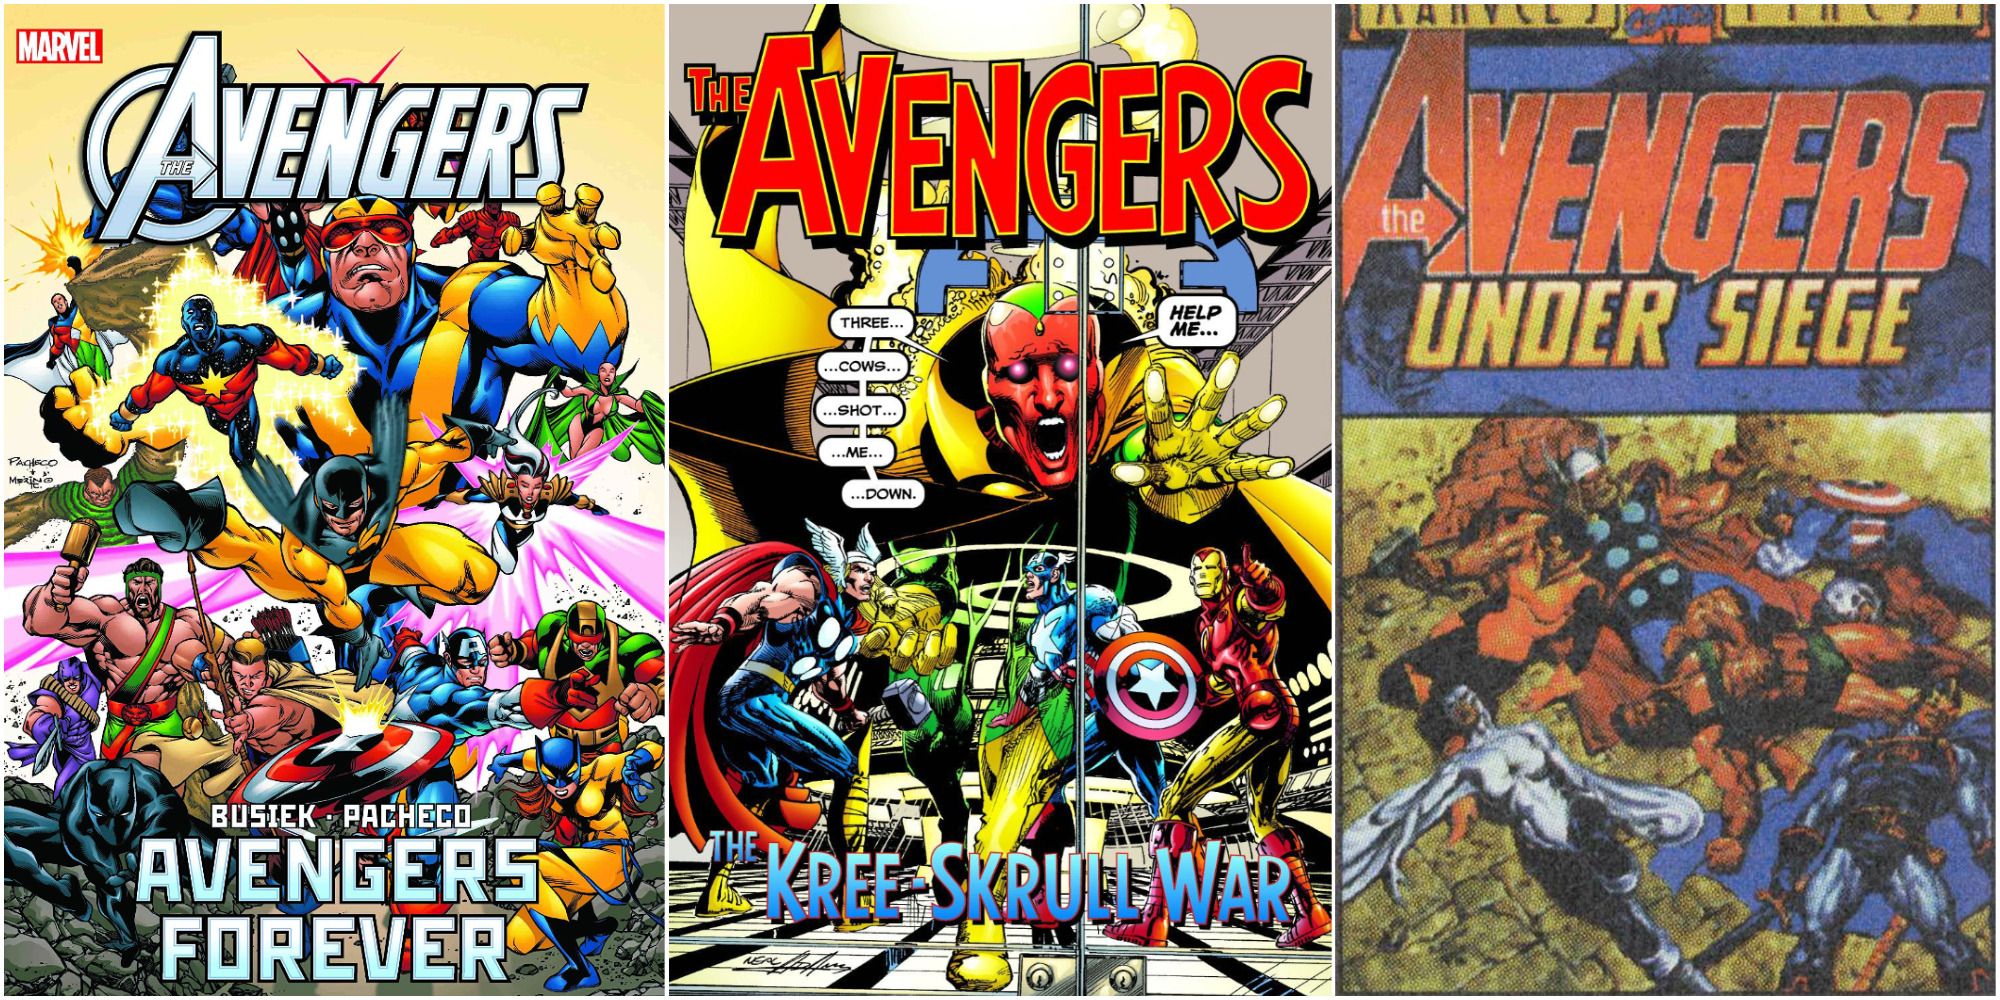 Avengers Forever. Kree-Skrull War, and Under Siege Comic Covers